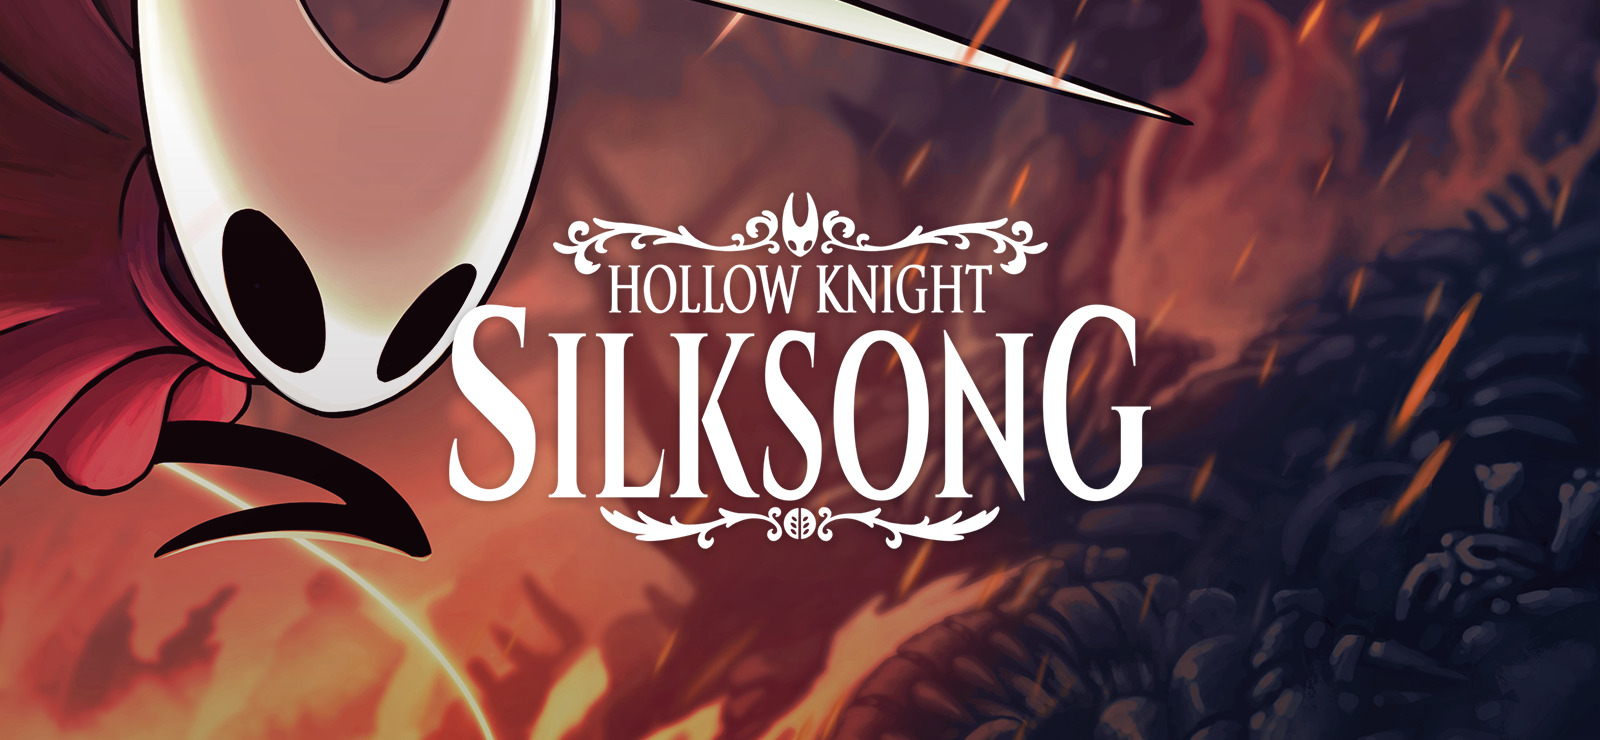 download hollow knight silksong reddit